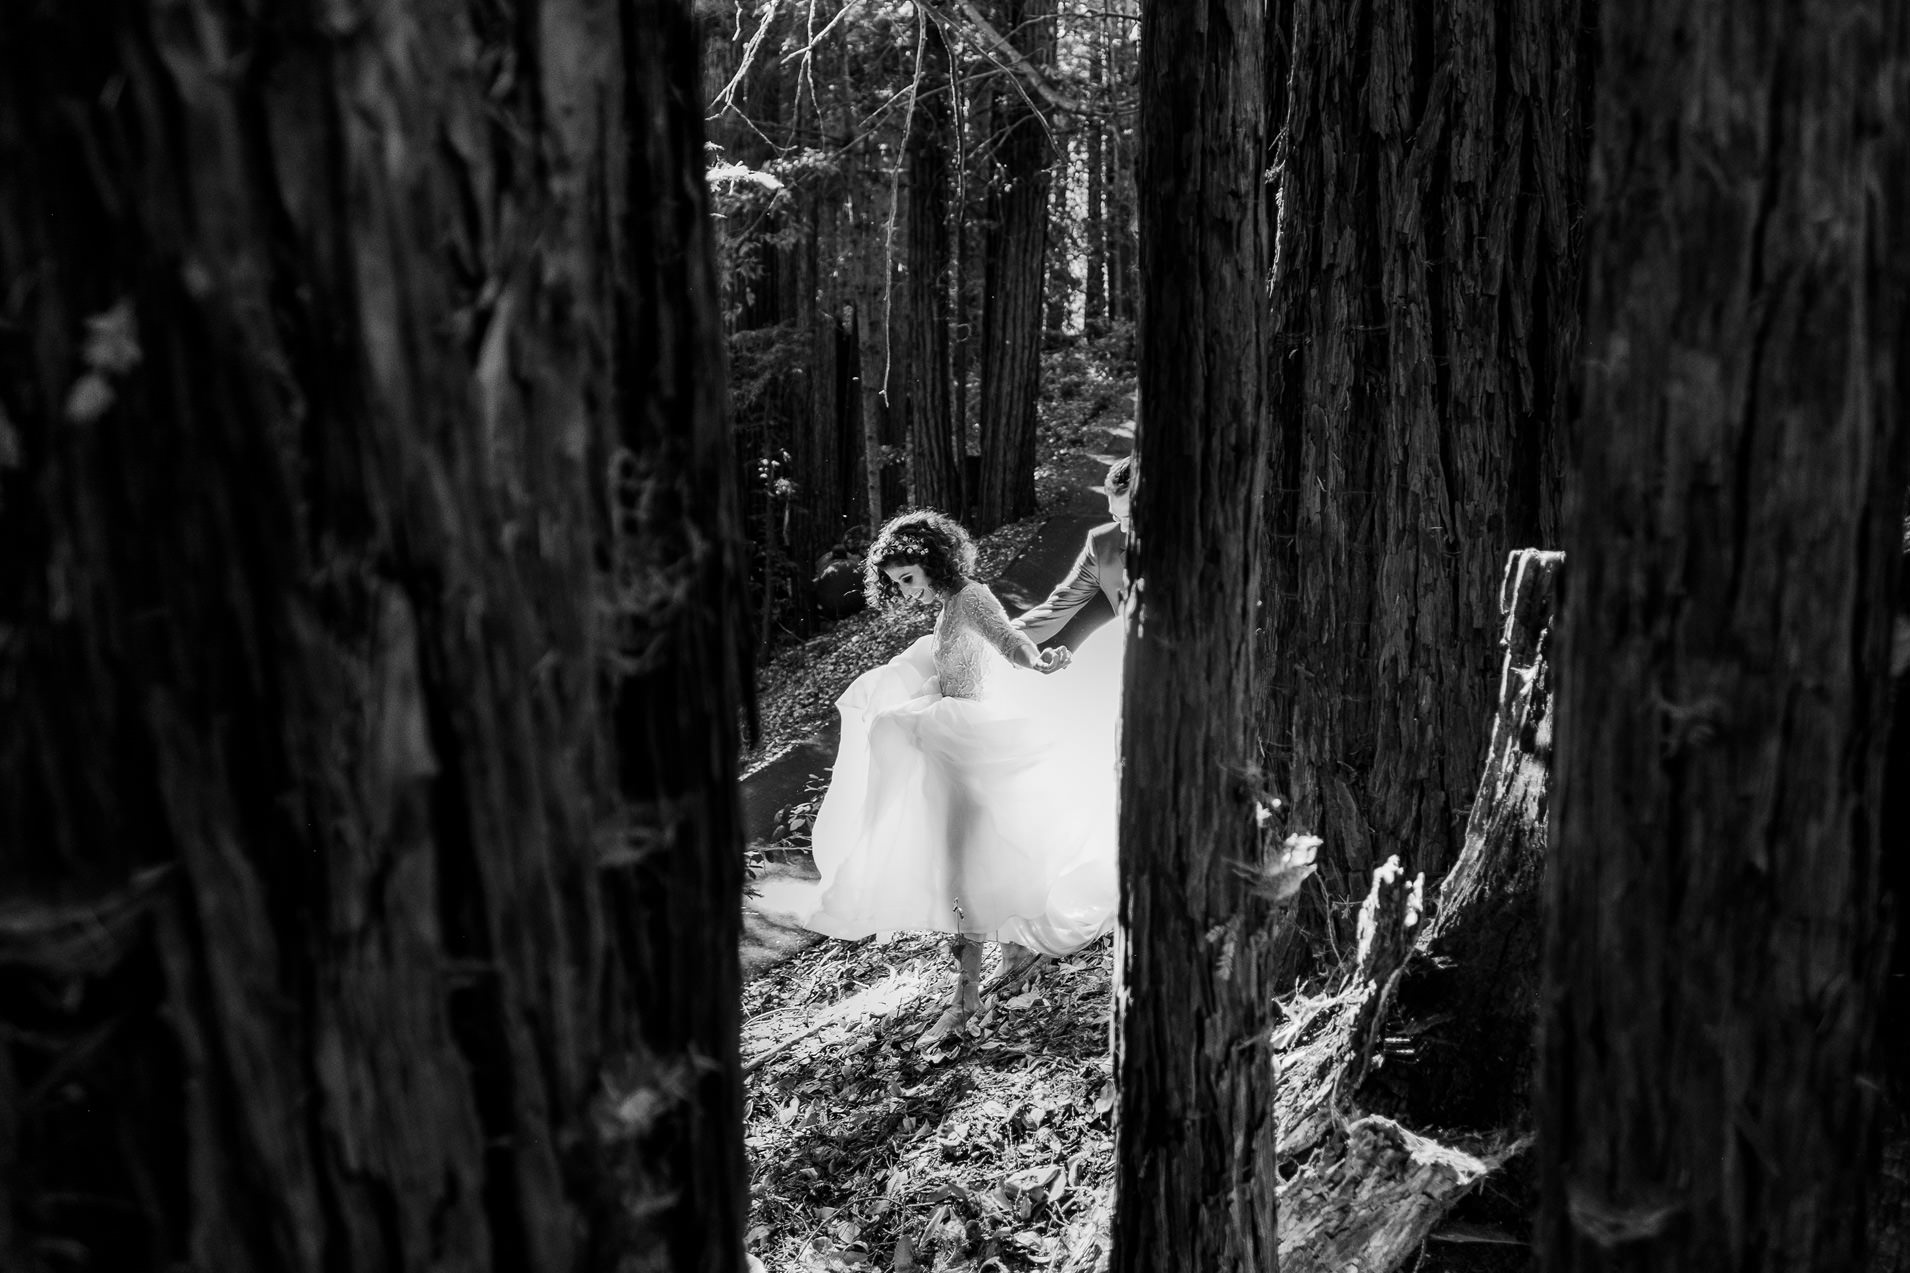 sequoia retreat centre wedding